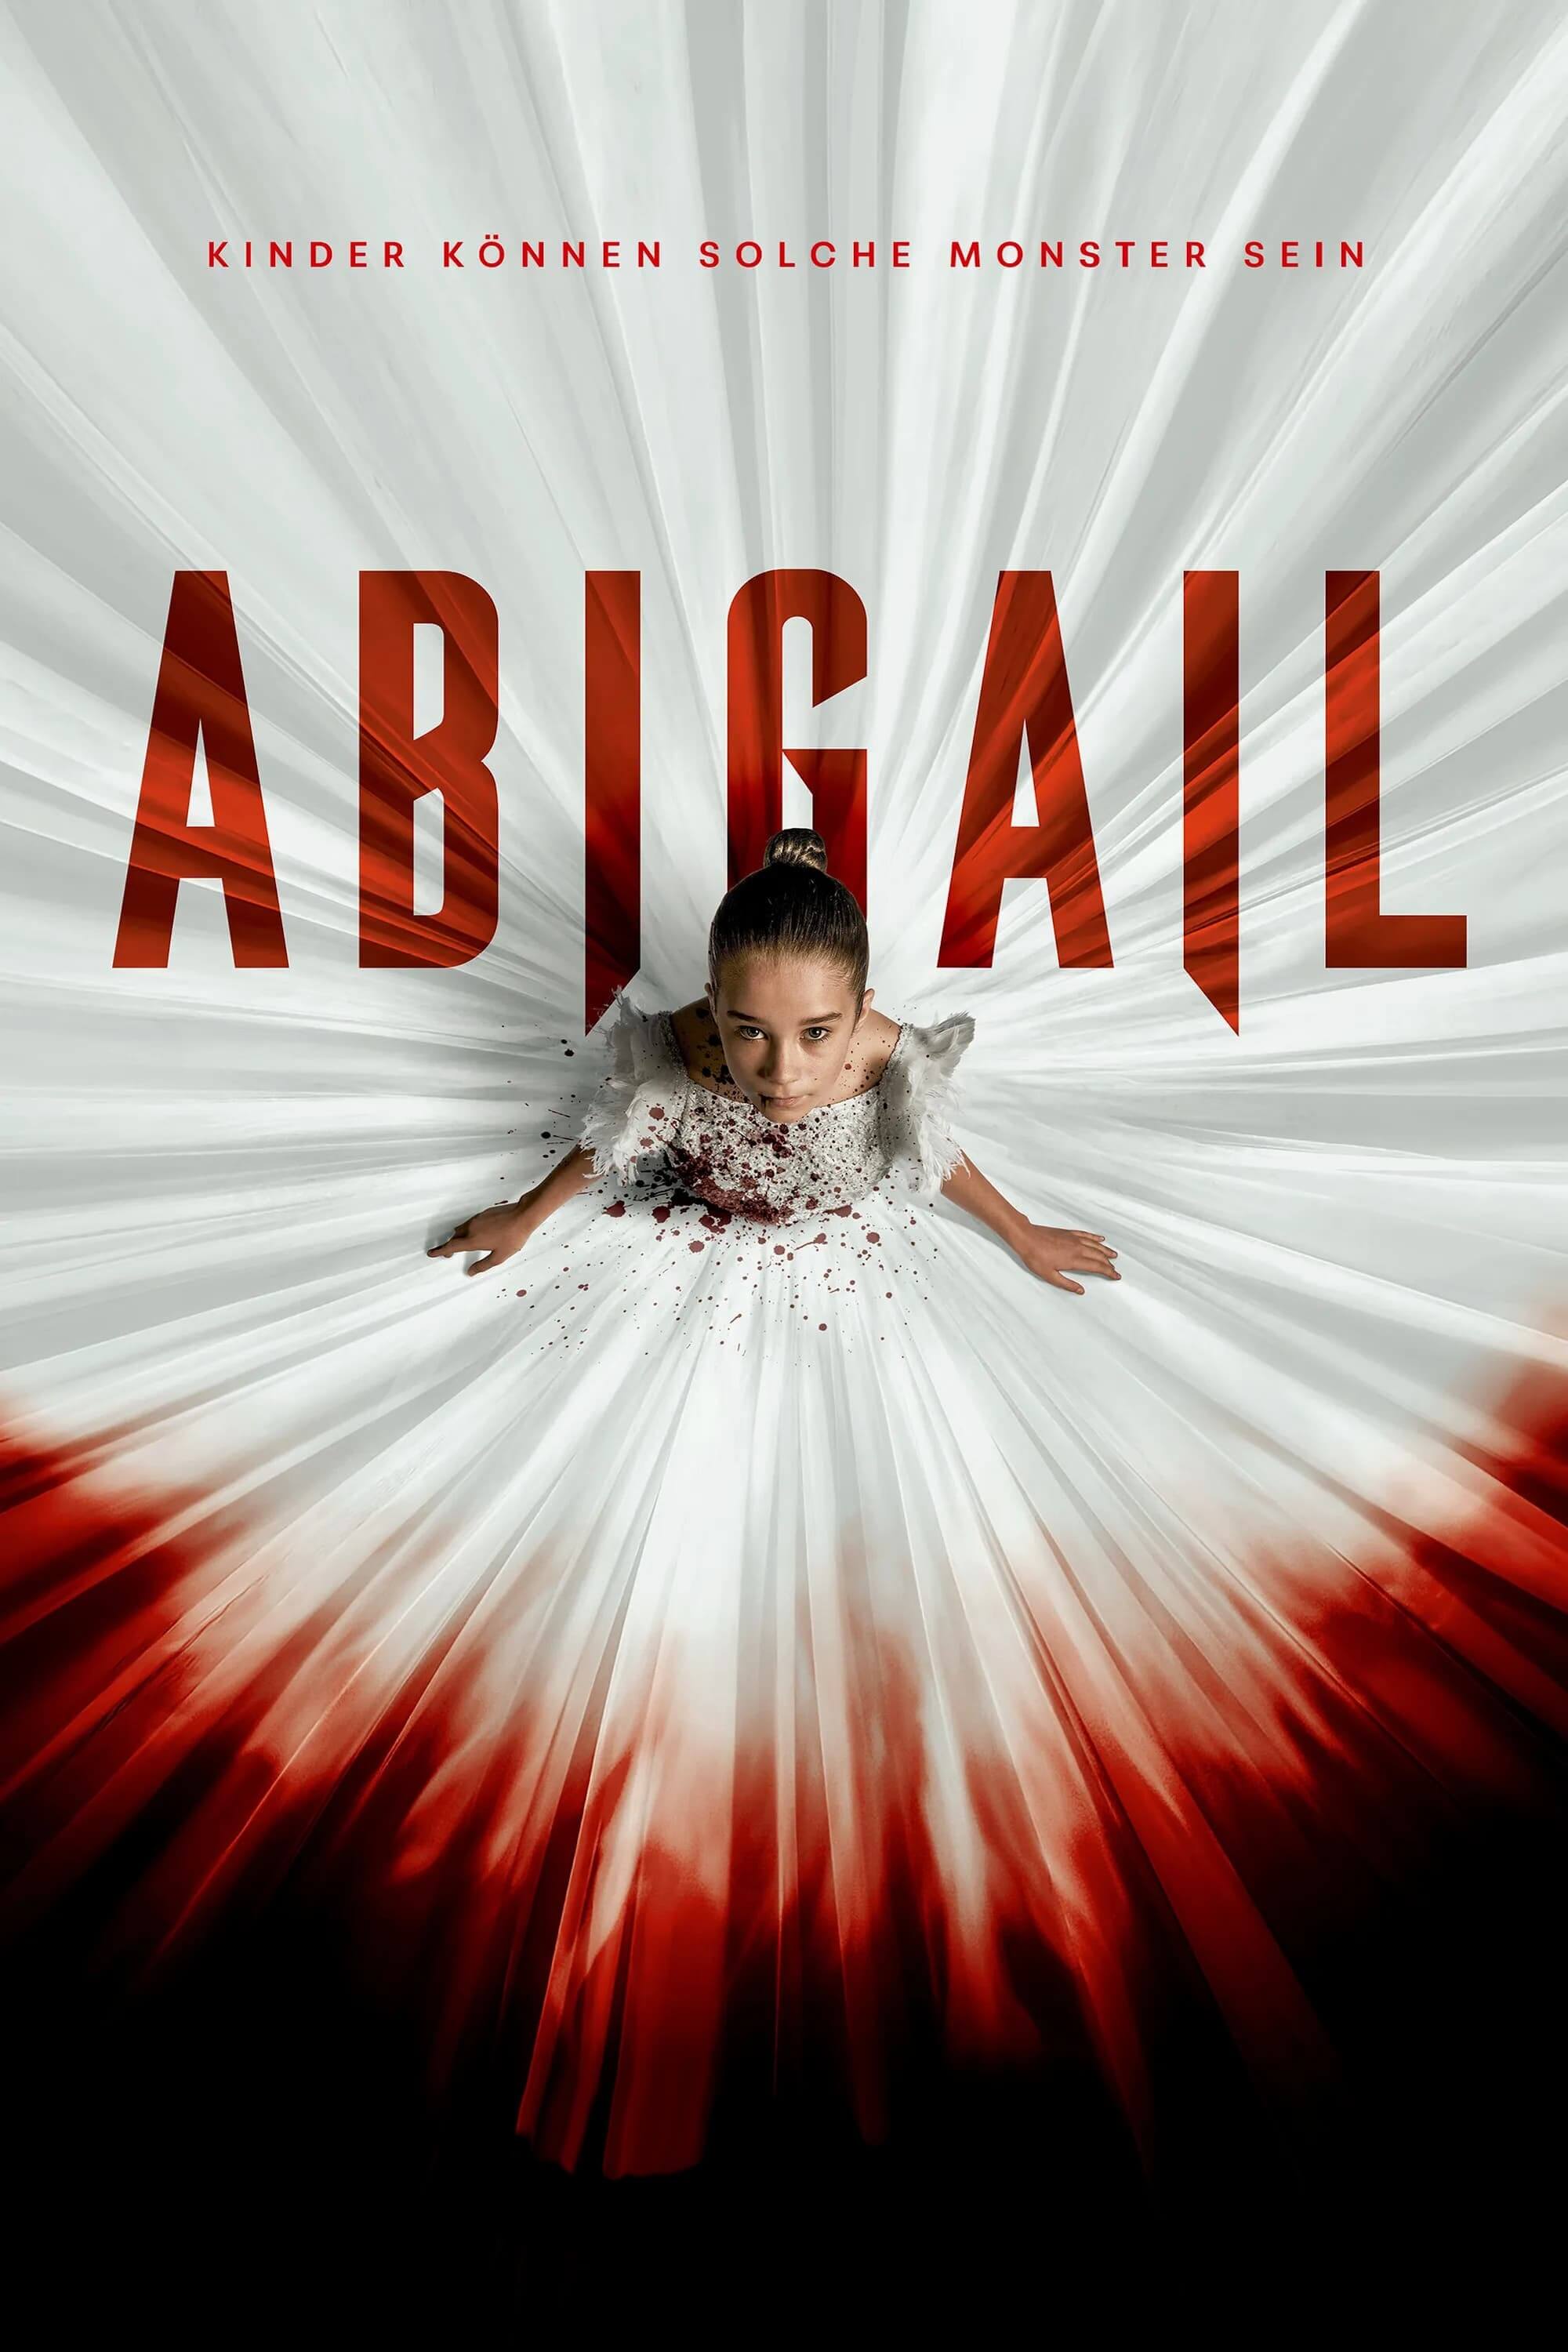 Tutsak Abigail